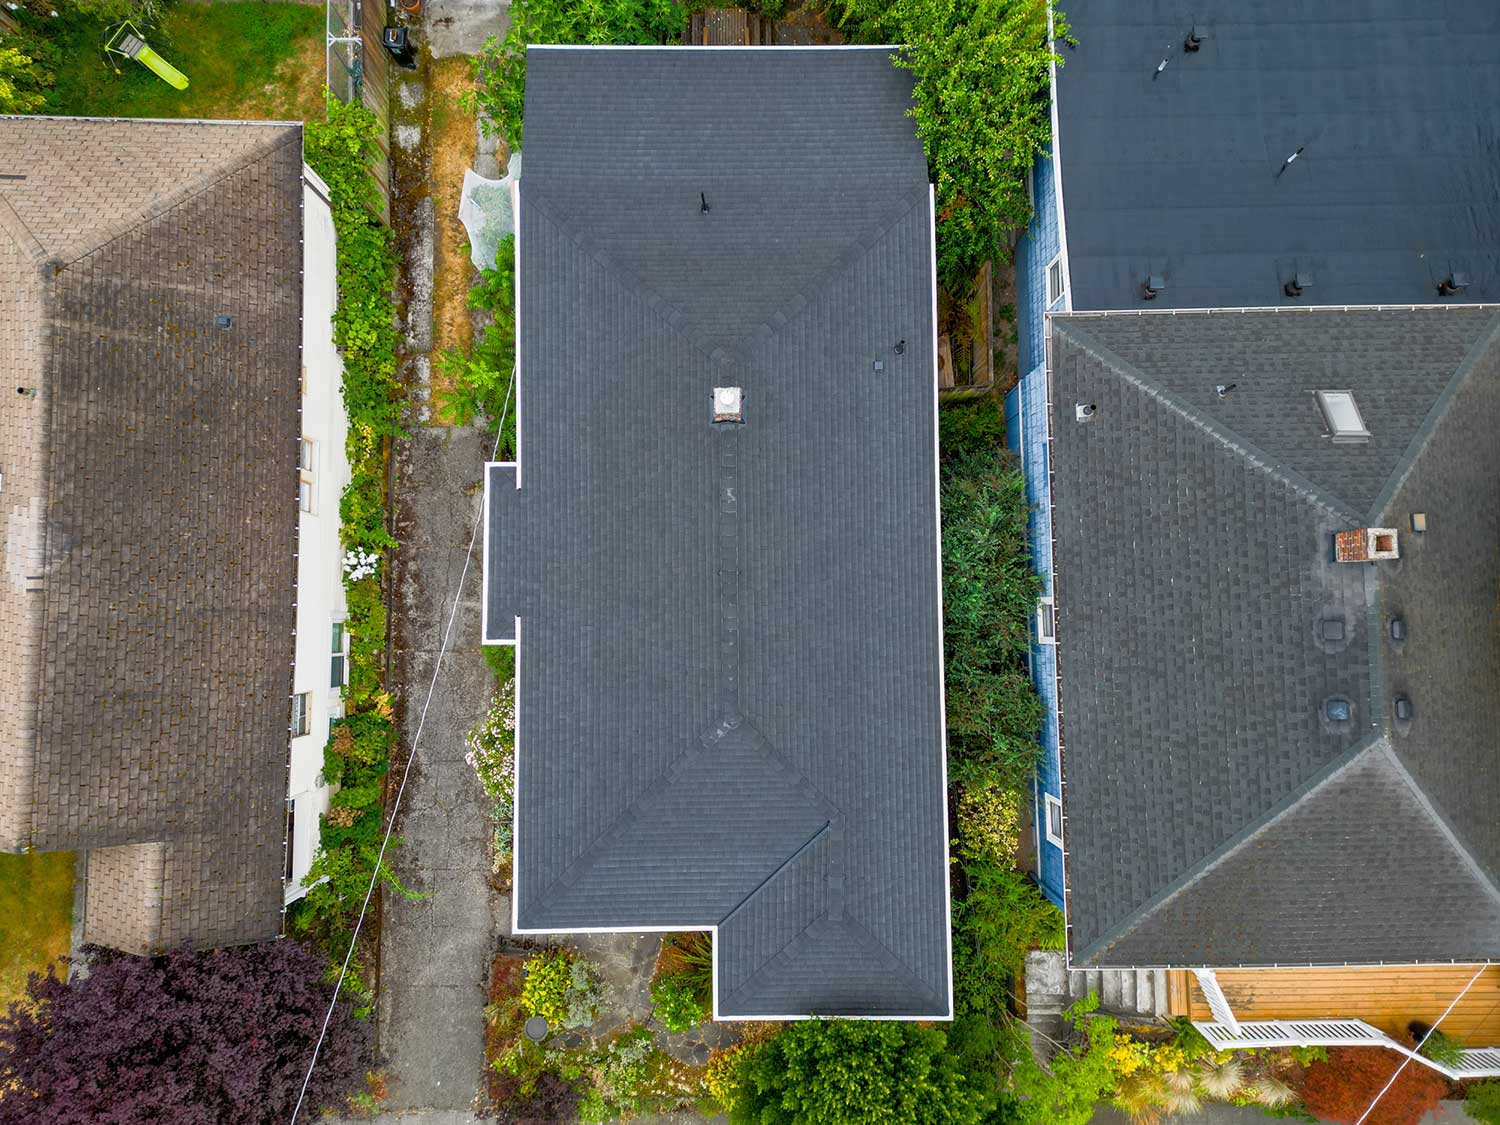 New Composite Asphalt Shingle Roof, Seattle, Washington - overhead view of the house roof